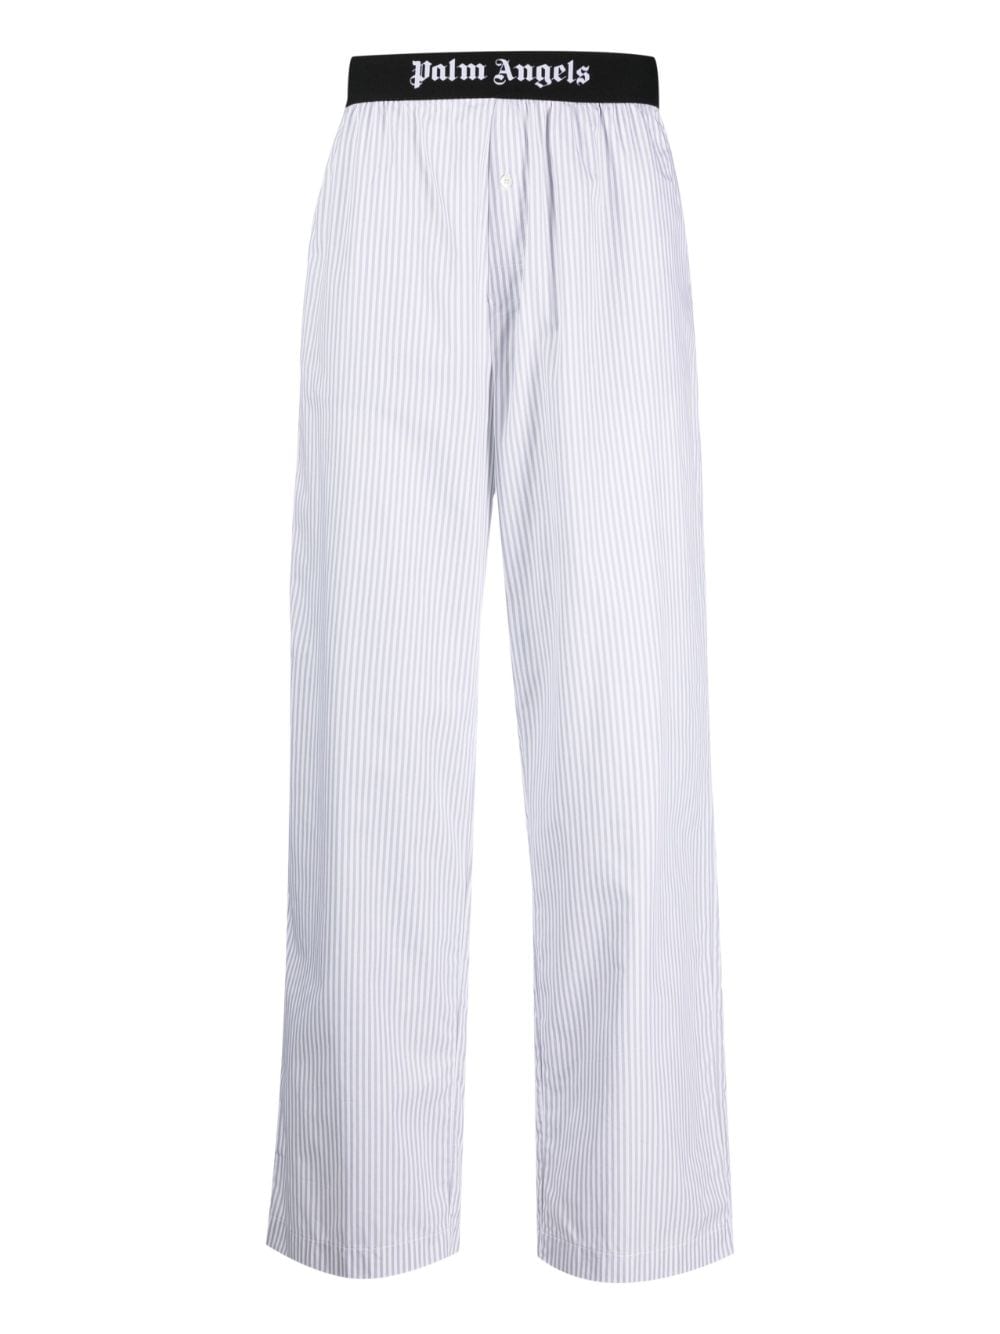 Palm Angels logo-waistband striped pajama trousers - Grey von Palm Angels